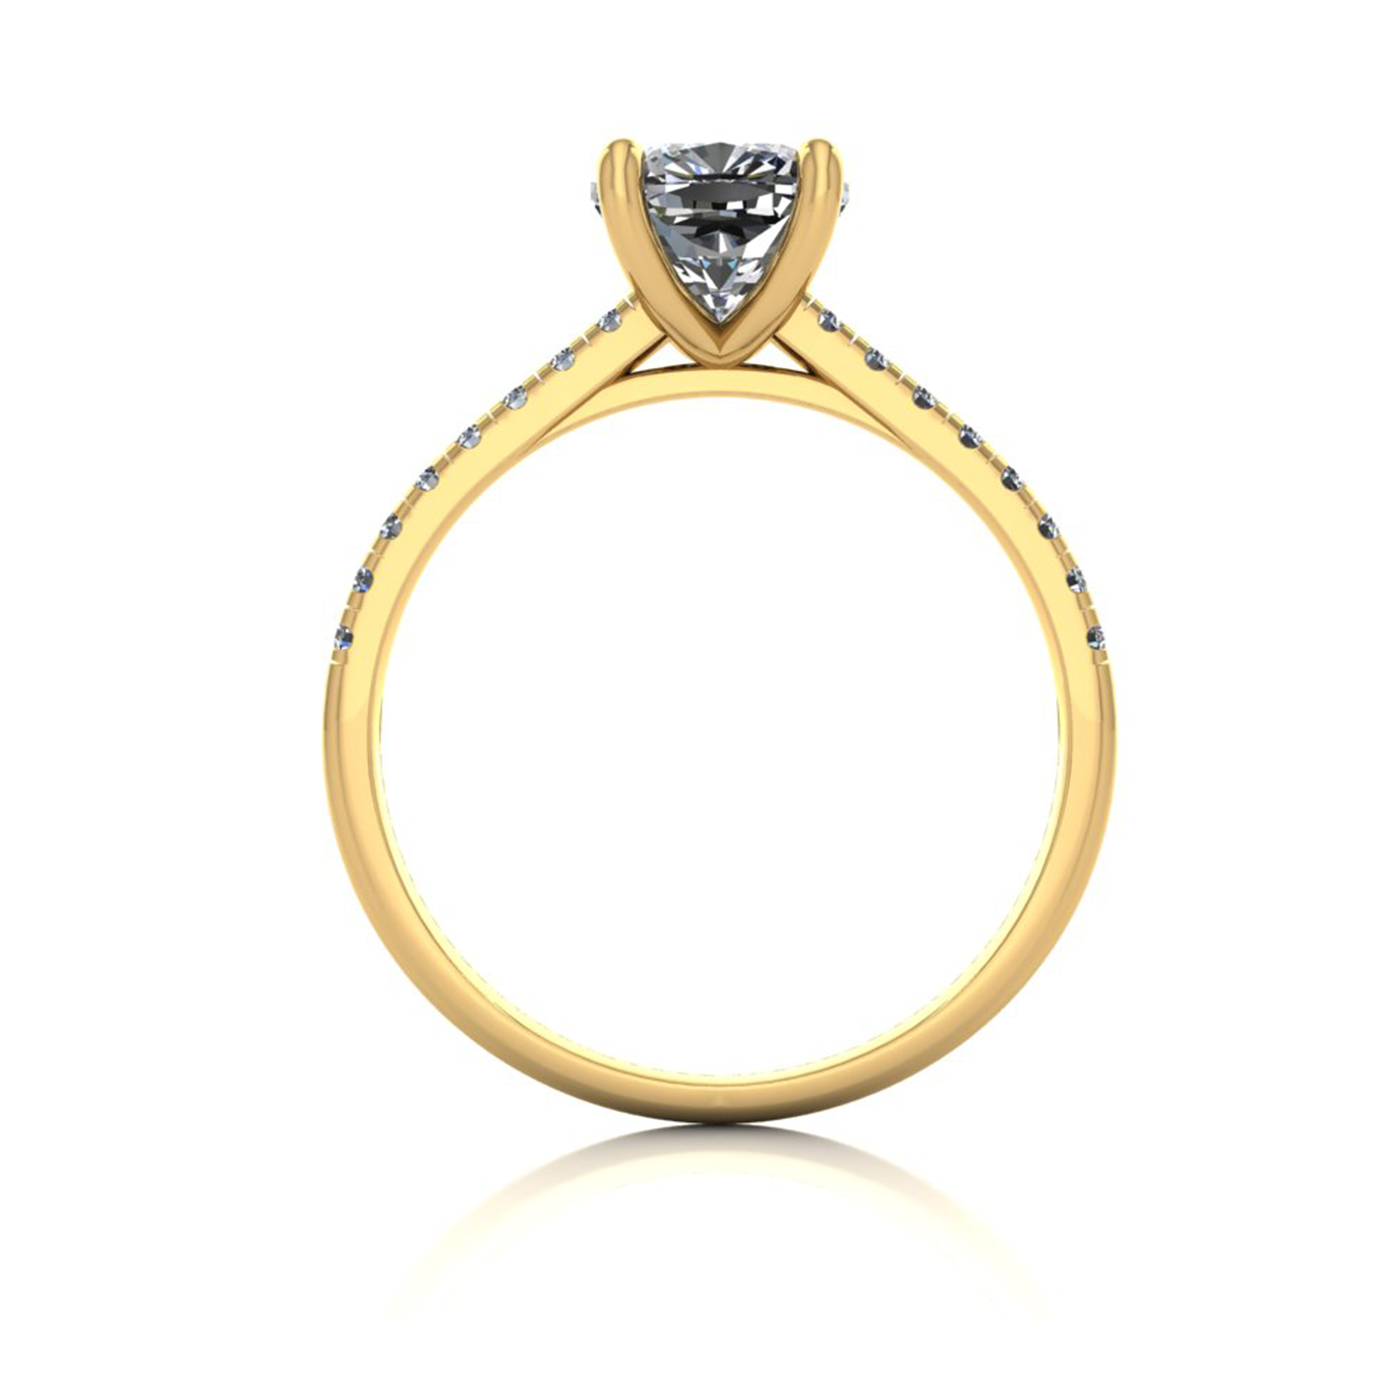 18k yellow gold 1.5ct 4 prongs cushion cut diamond engagement ring with whisper thin pavÉ set band